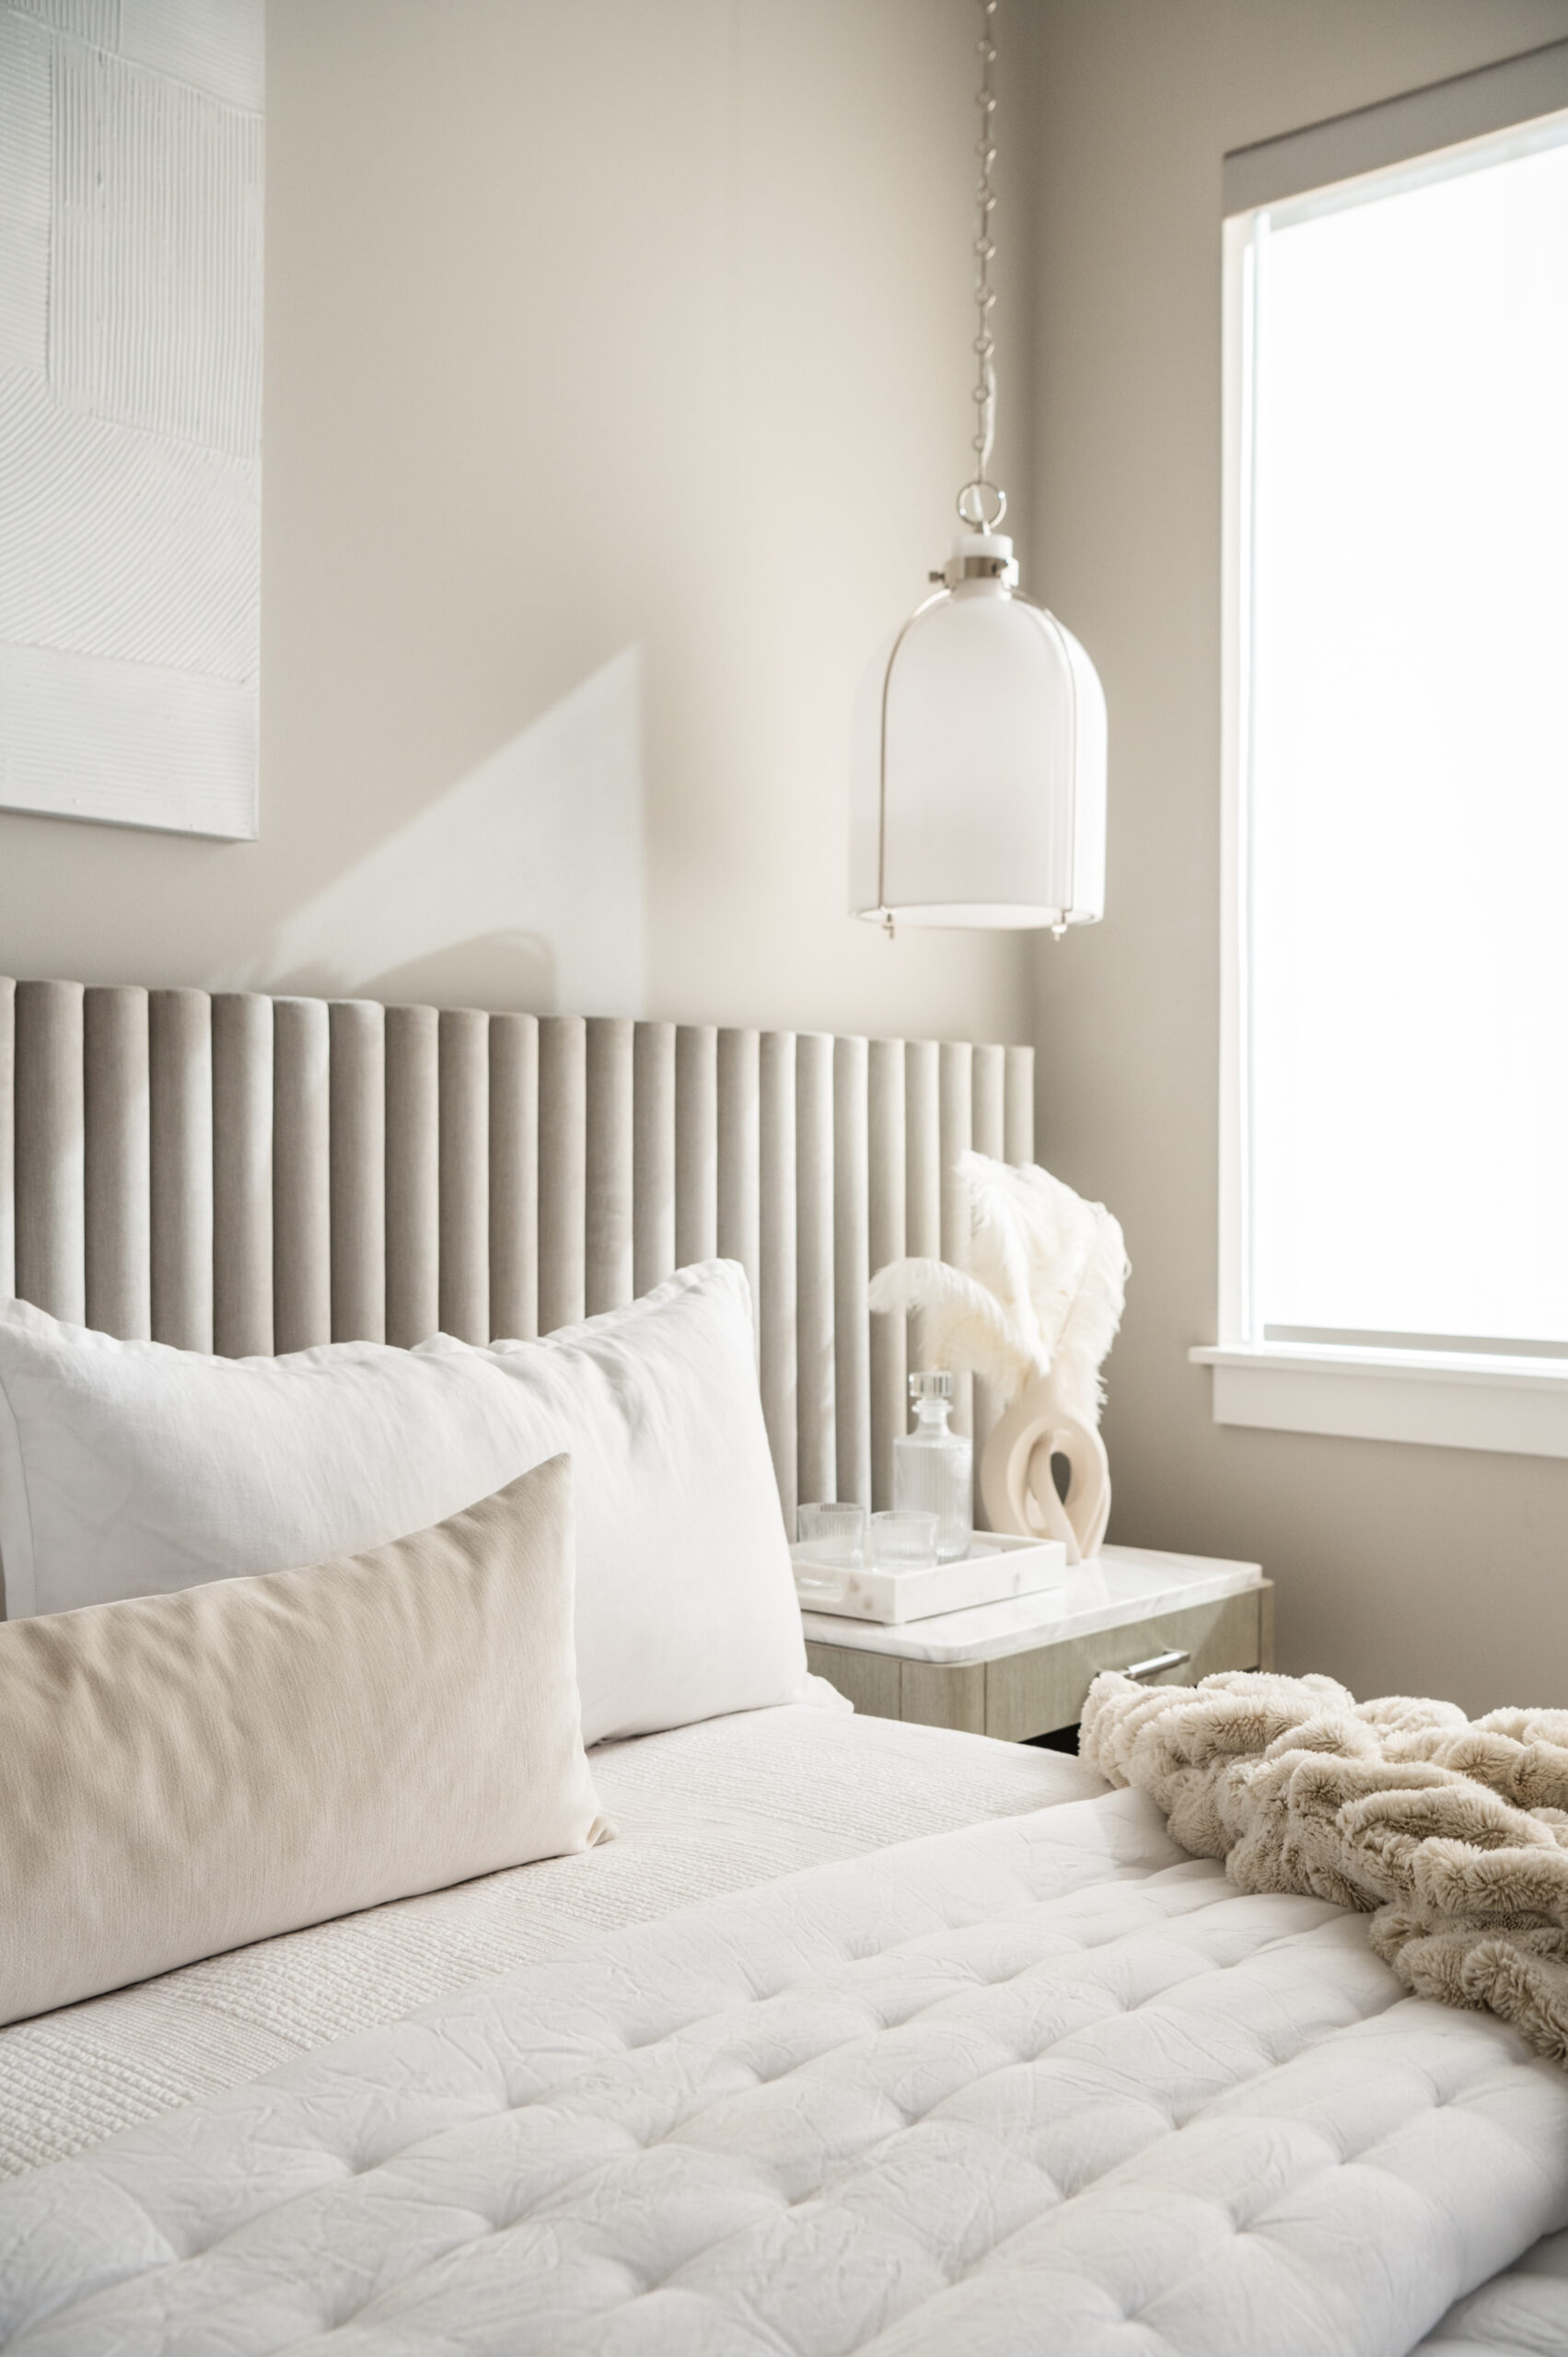 Serene all white and tan bedroom interior design